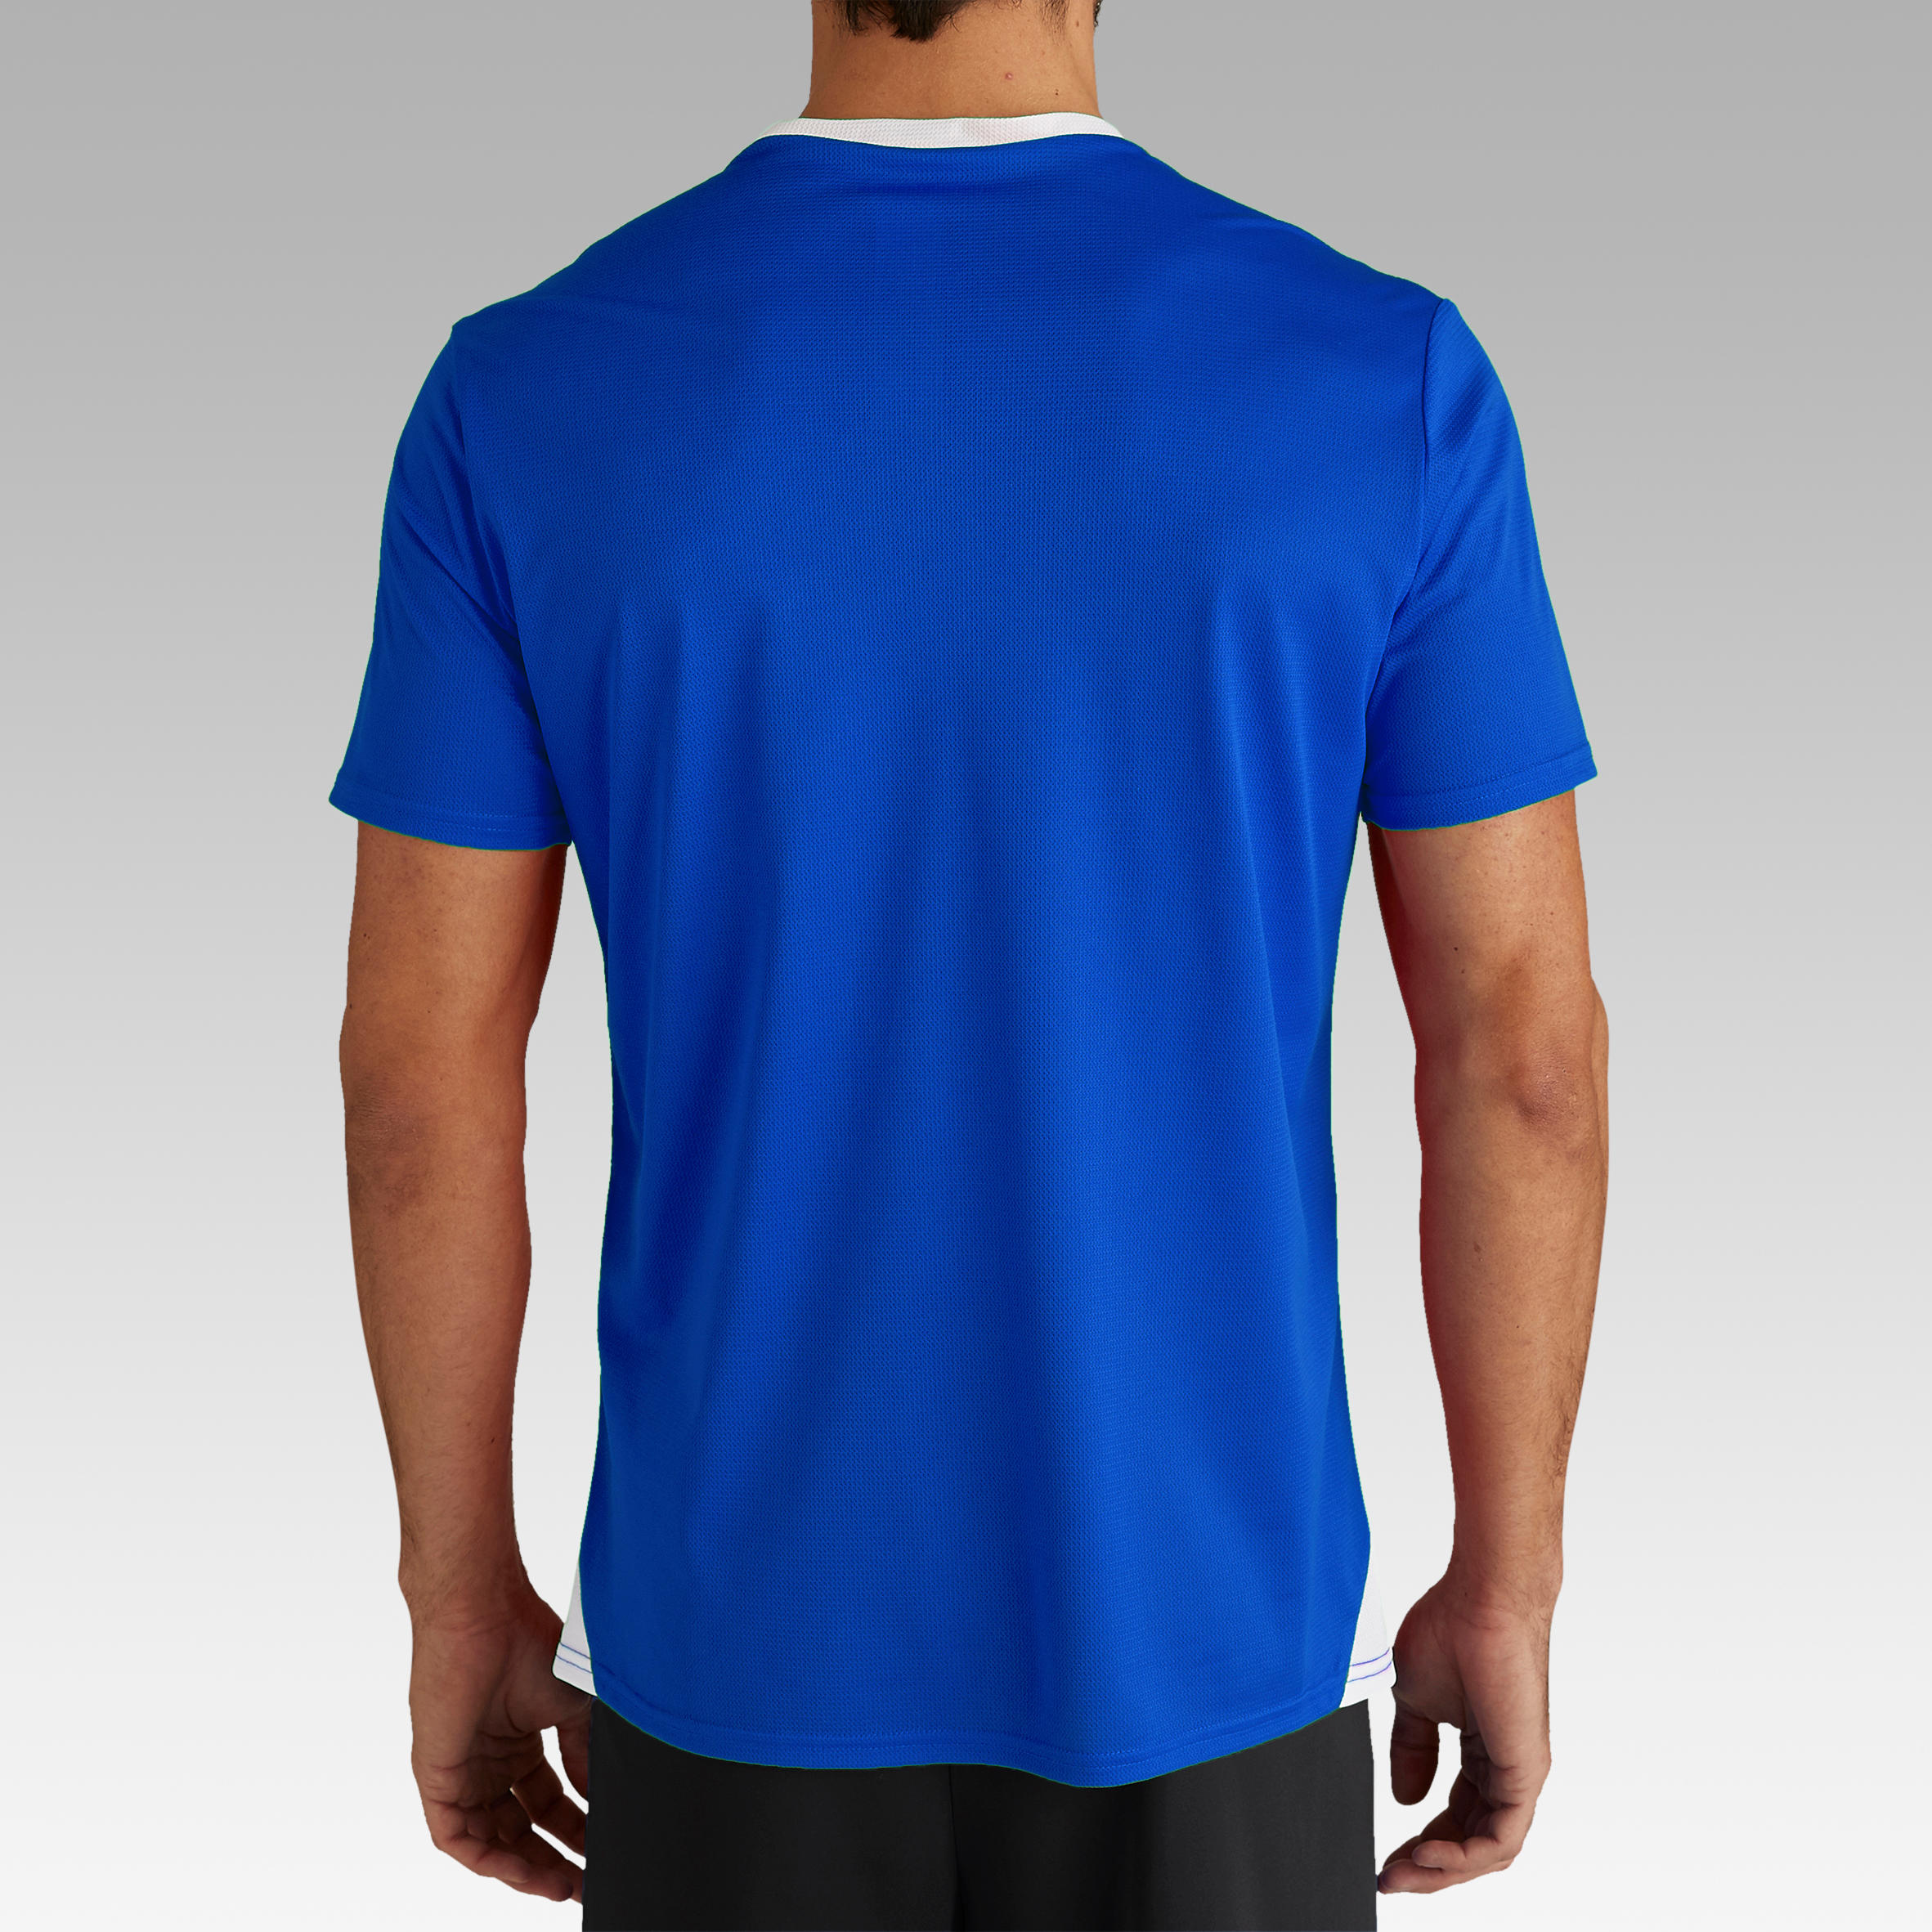 Buy Men's Football Jersey F100 Blue Online